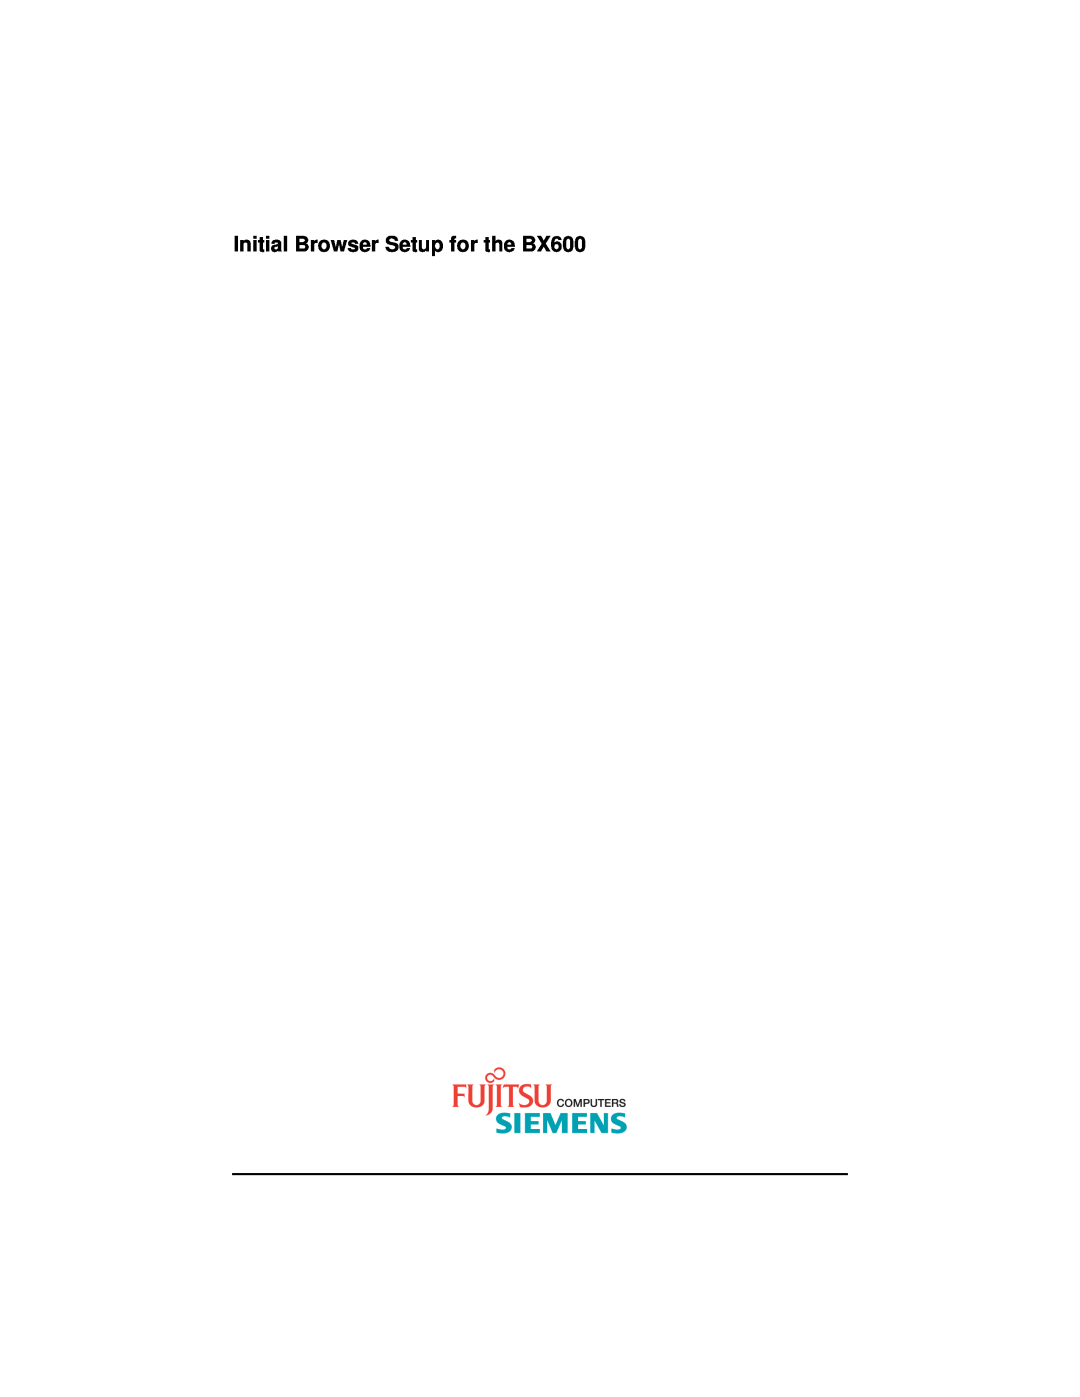 Fujitsu manual Initial Browser Setup for the BX600 